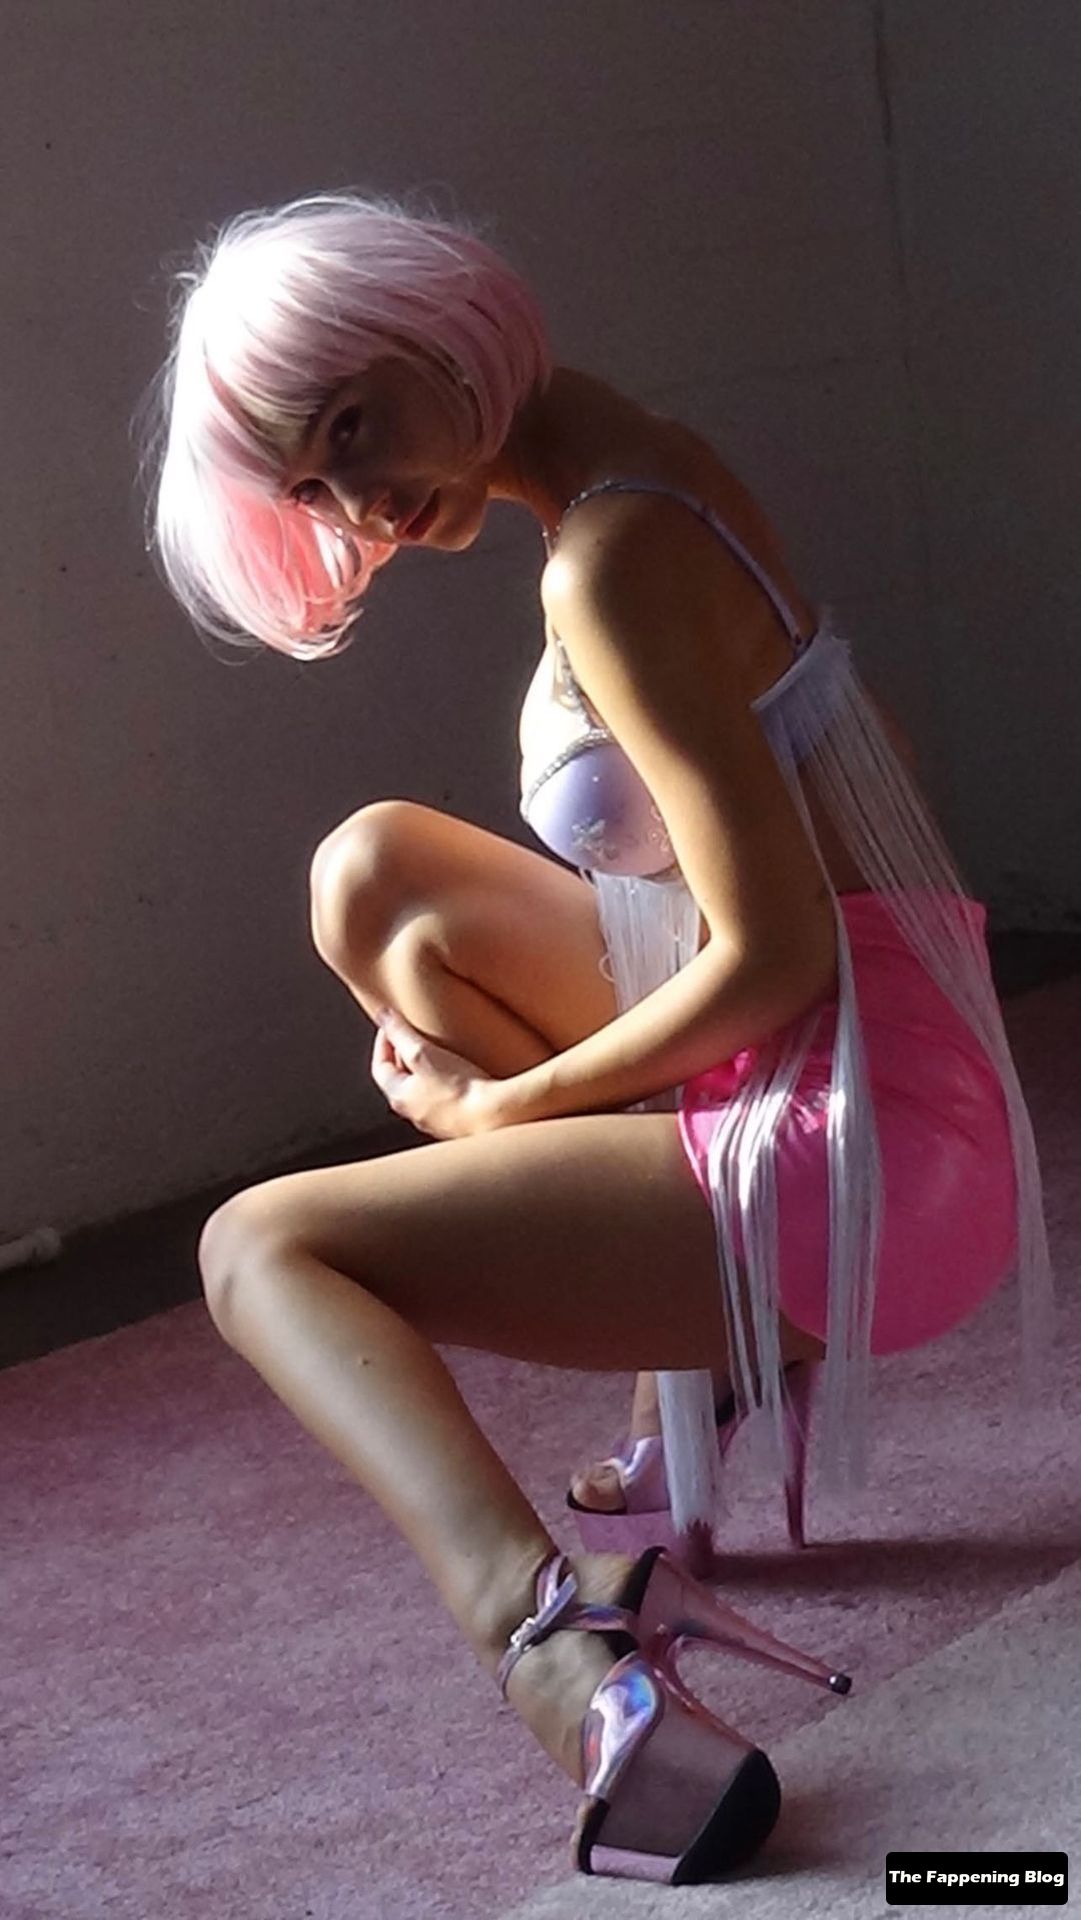 Alexis Ren Looks Hot in a Pink Skirt on Halloween (15 Photos + Video)